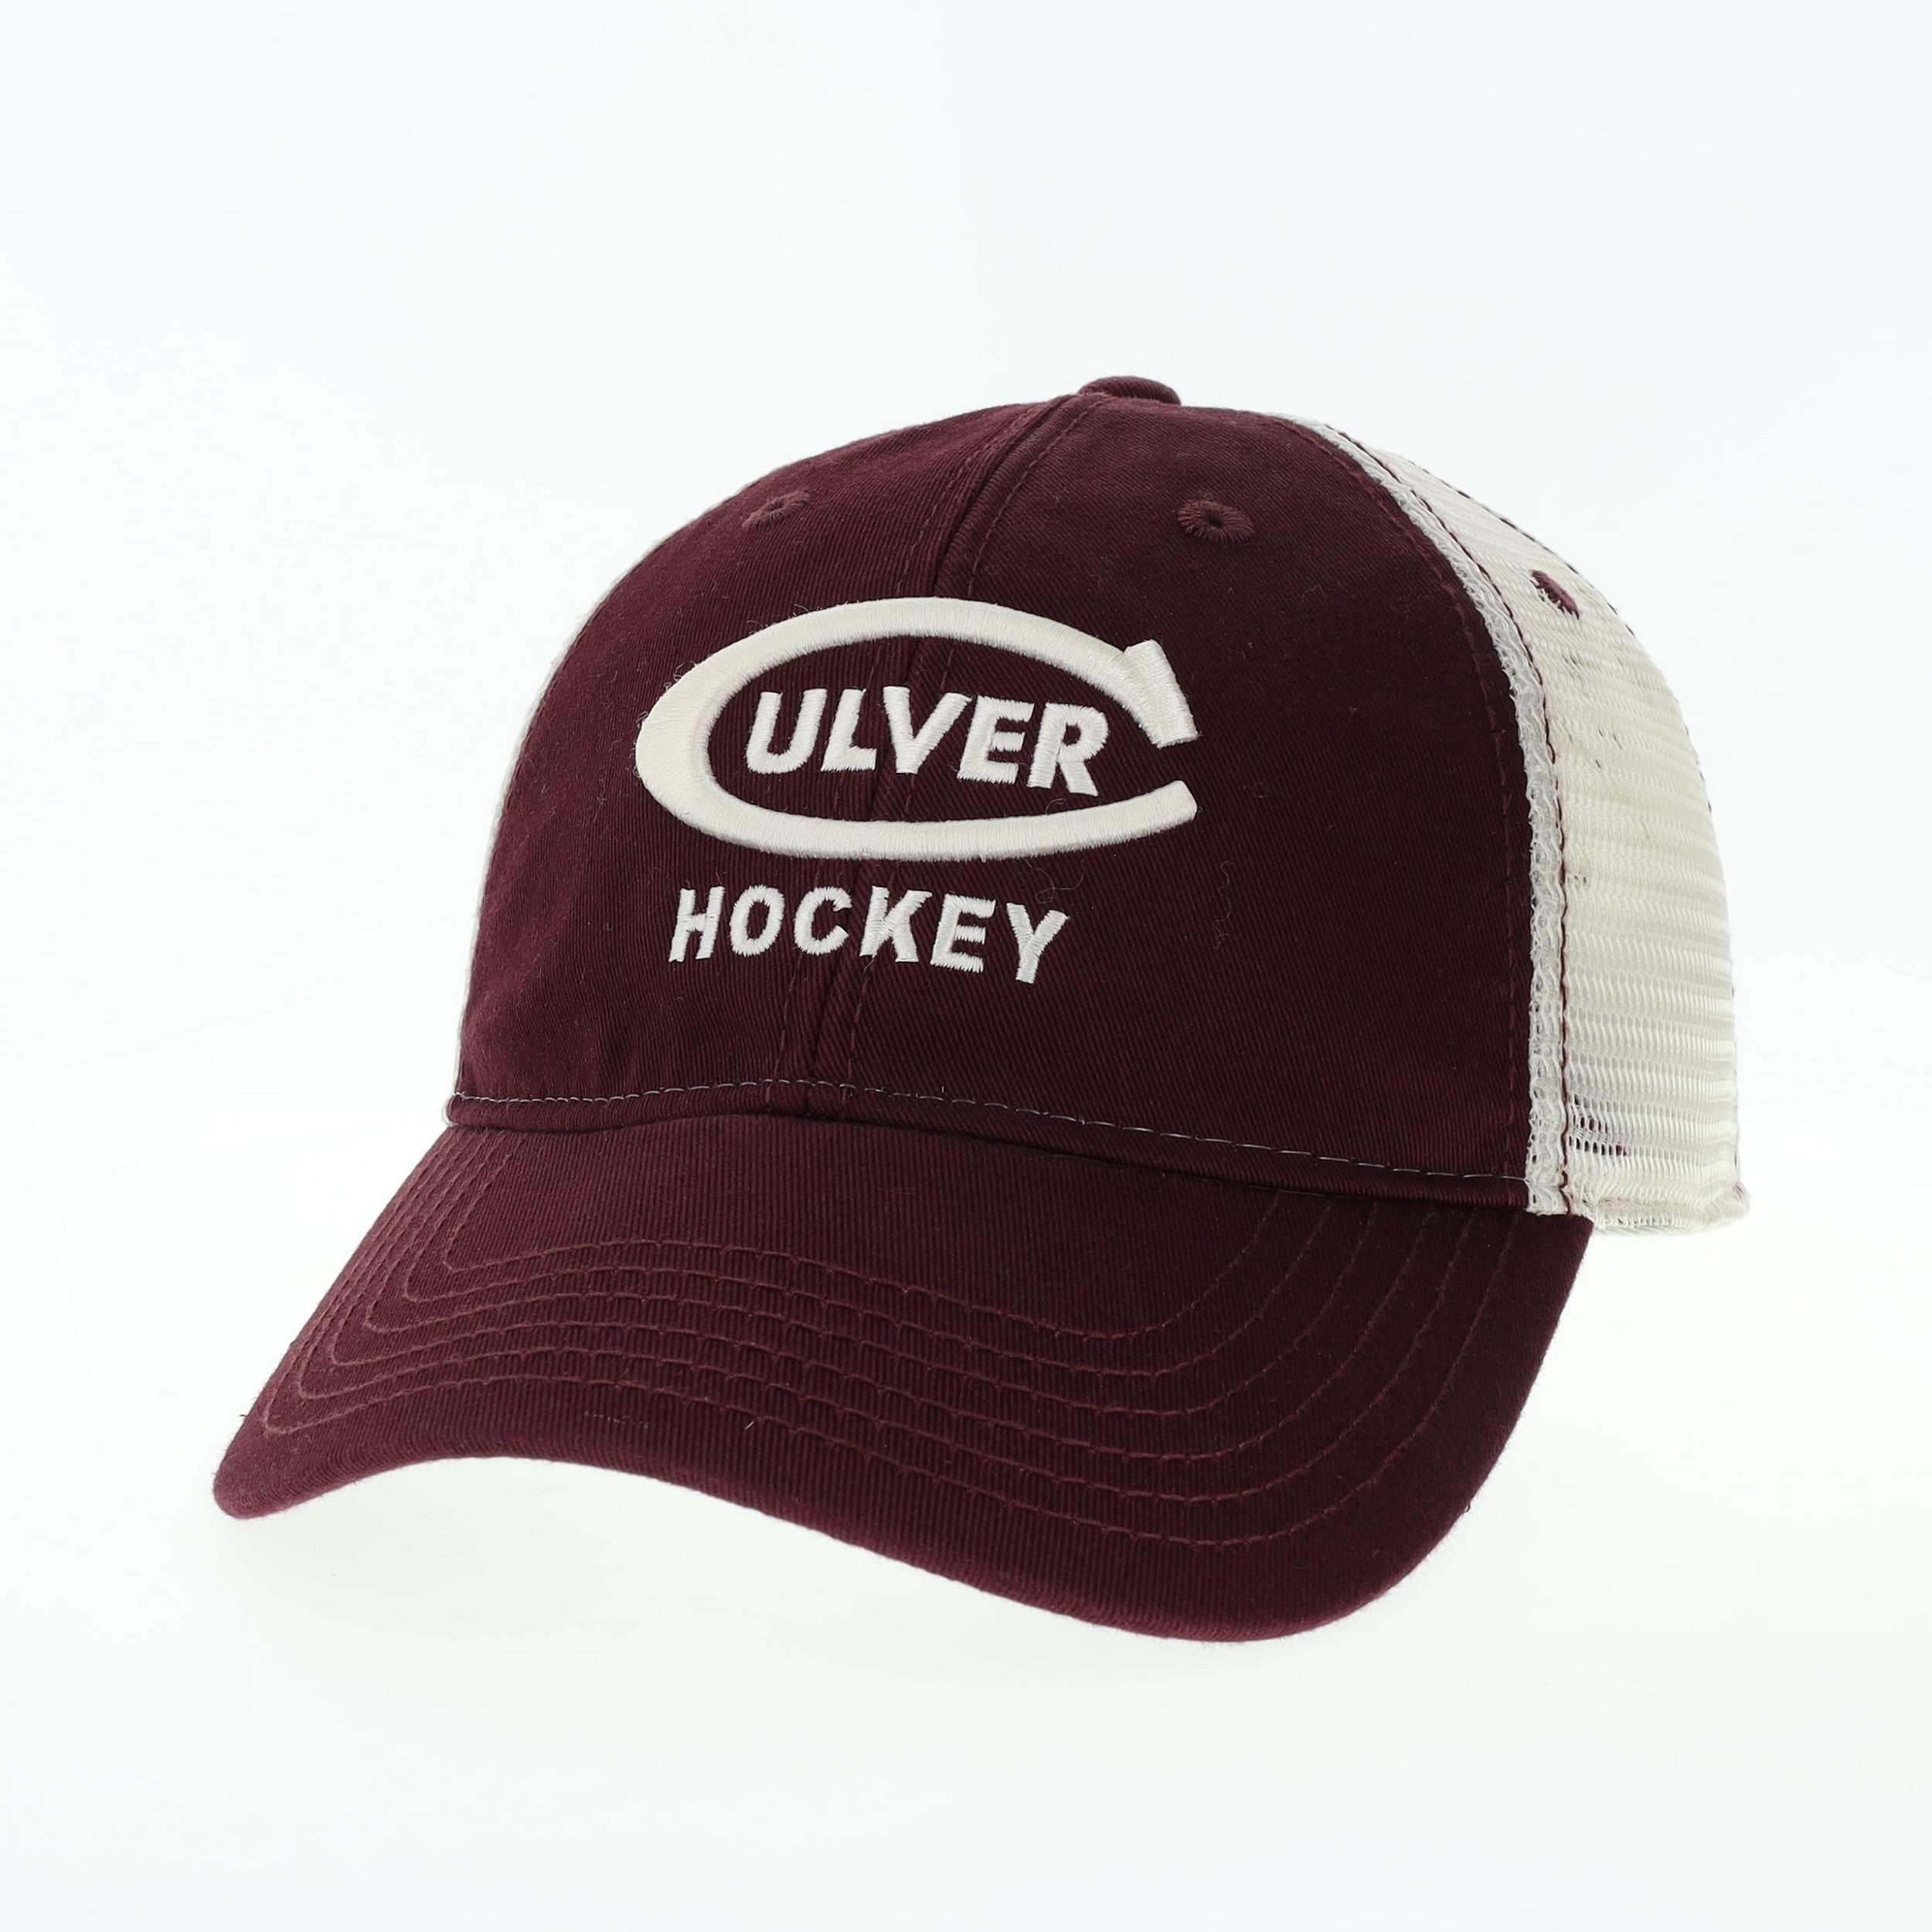 Culver Hockey Relaxed Twill Trucker - Maroon